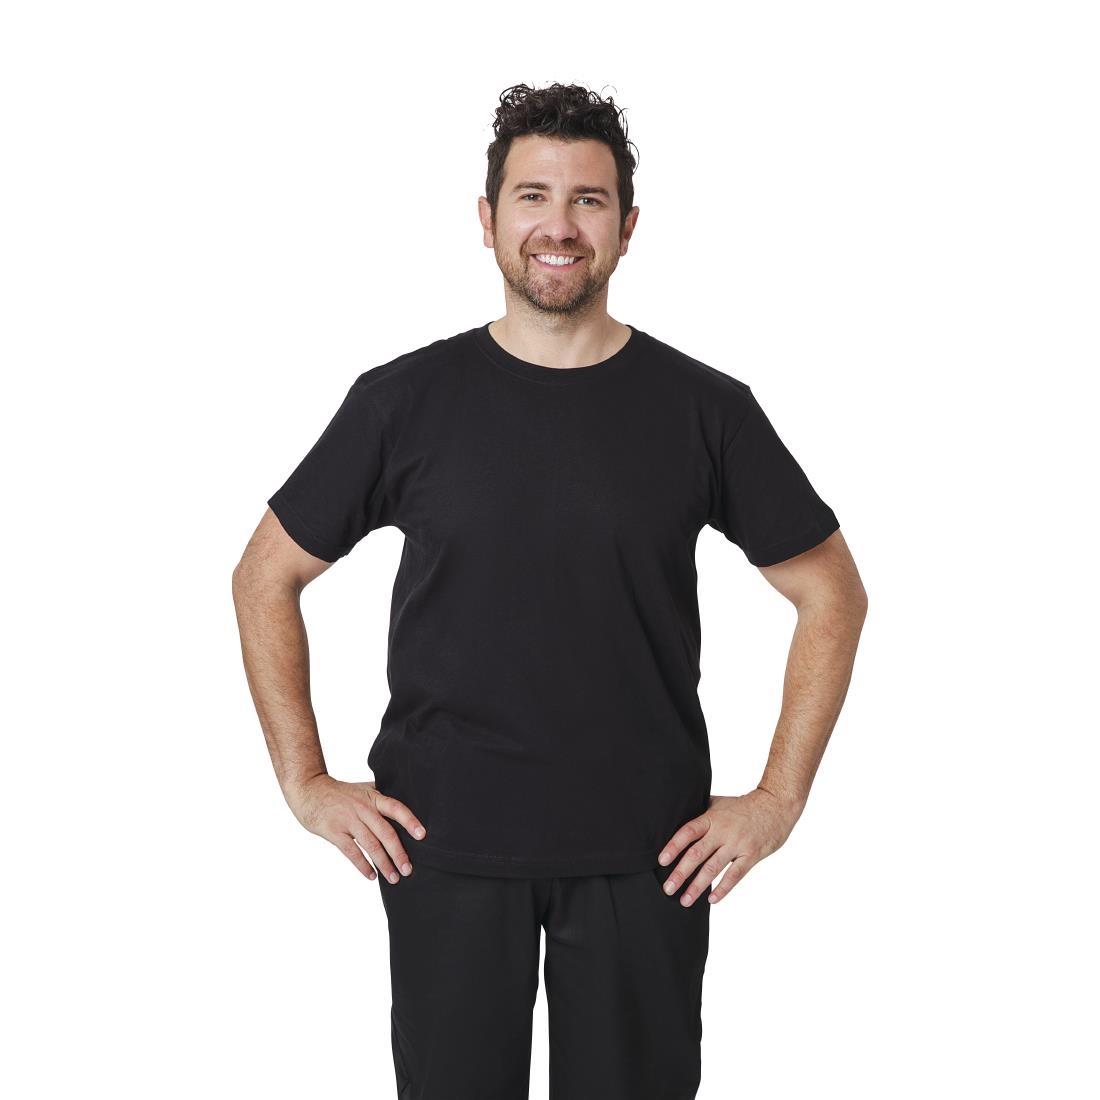 Unisex Chef T-Shirt Black 2XL - A295-2XL  - 2